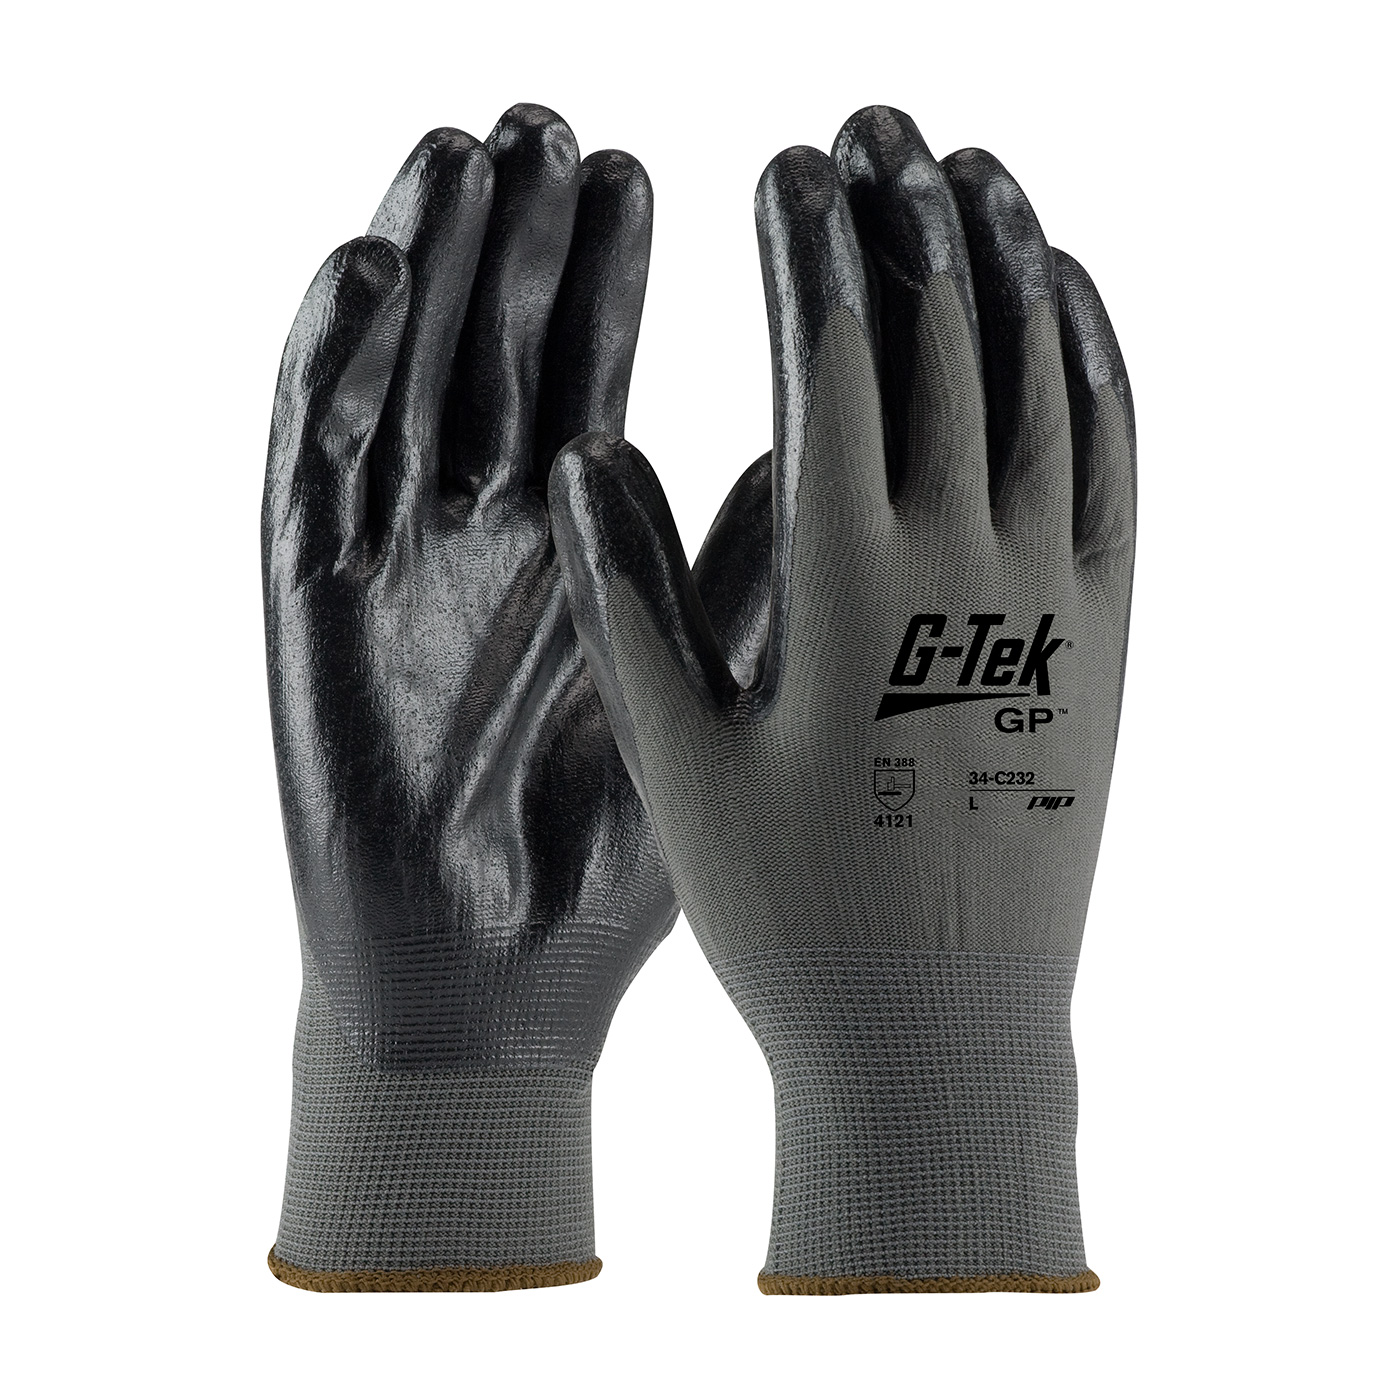 PIP 34-C232/L G-Tek GP Seamless Knit Nylon Glove with Nitrile Coated Foam Grip on Palm & Fingers - Economy Grade - Large PID-34 C232 L